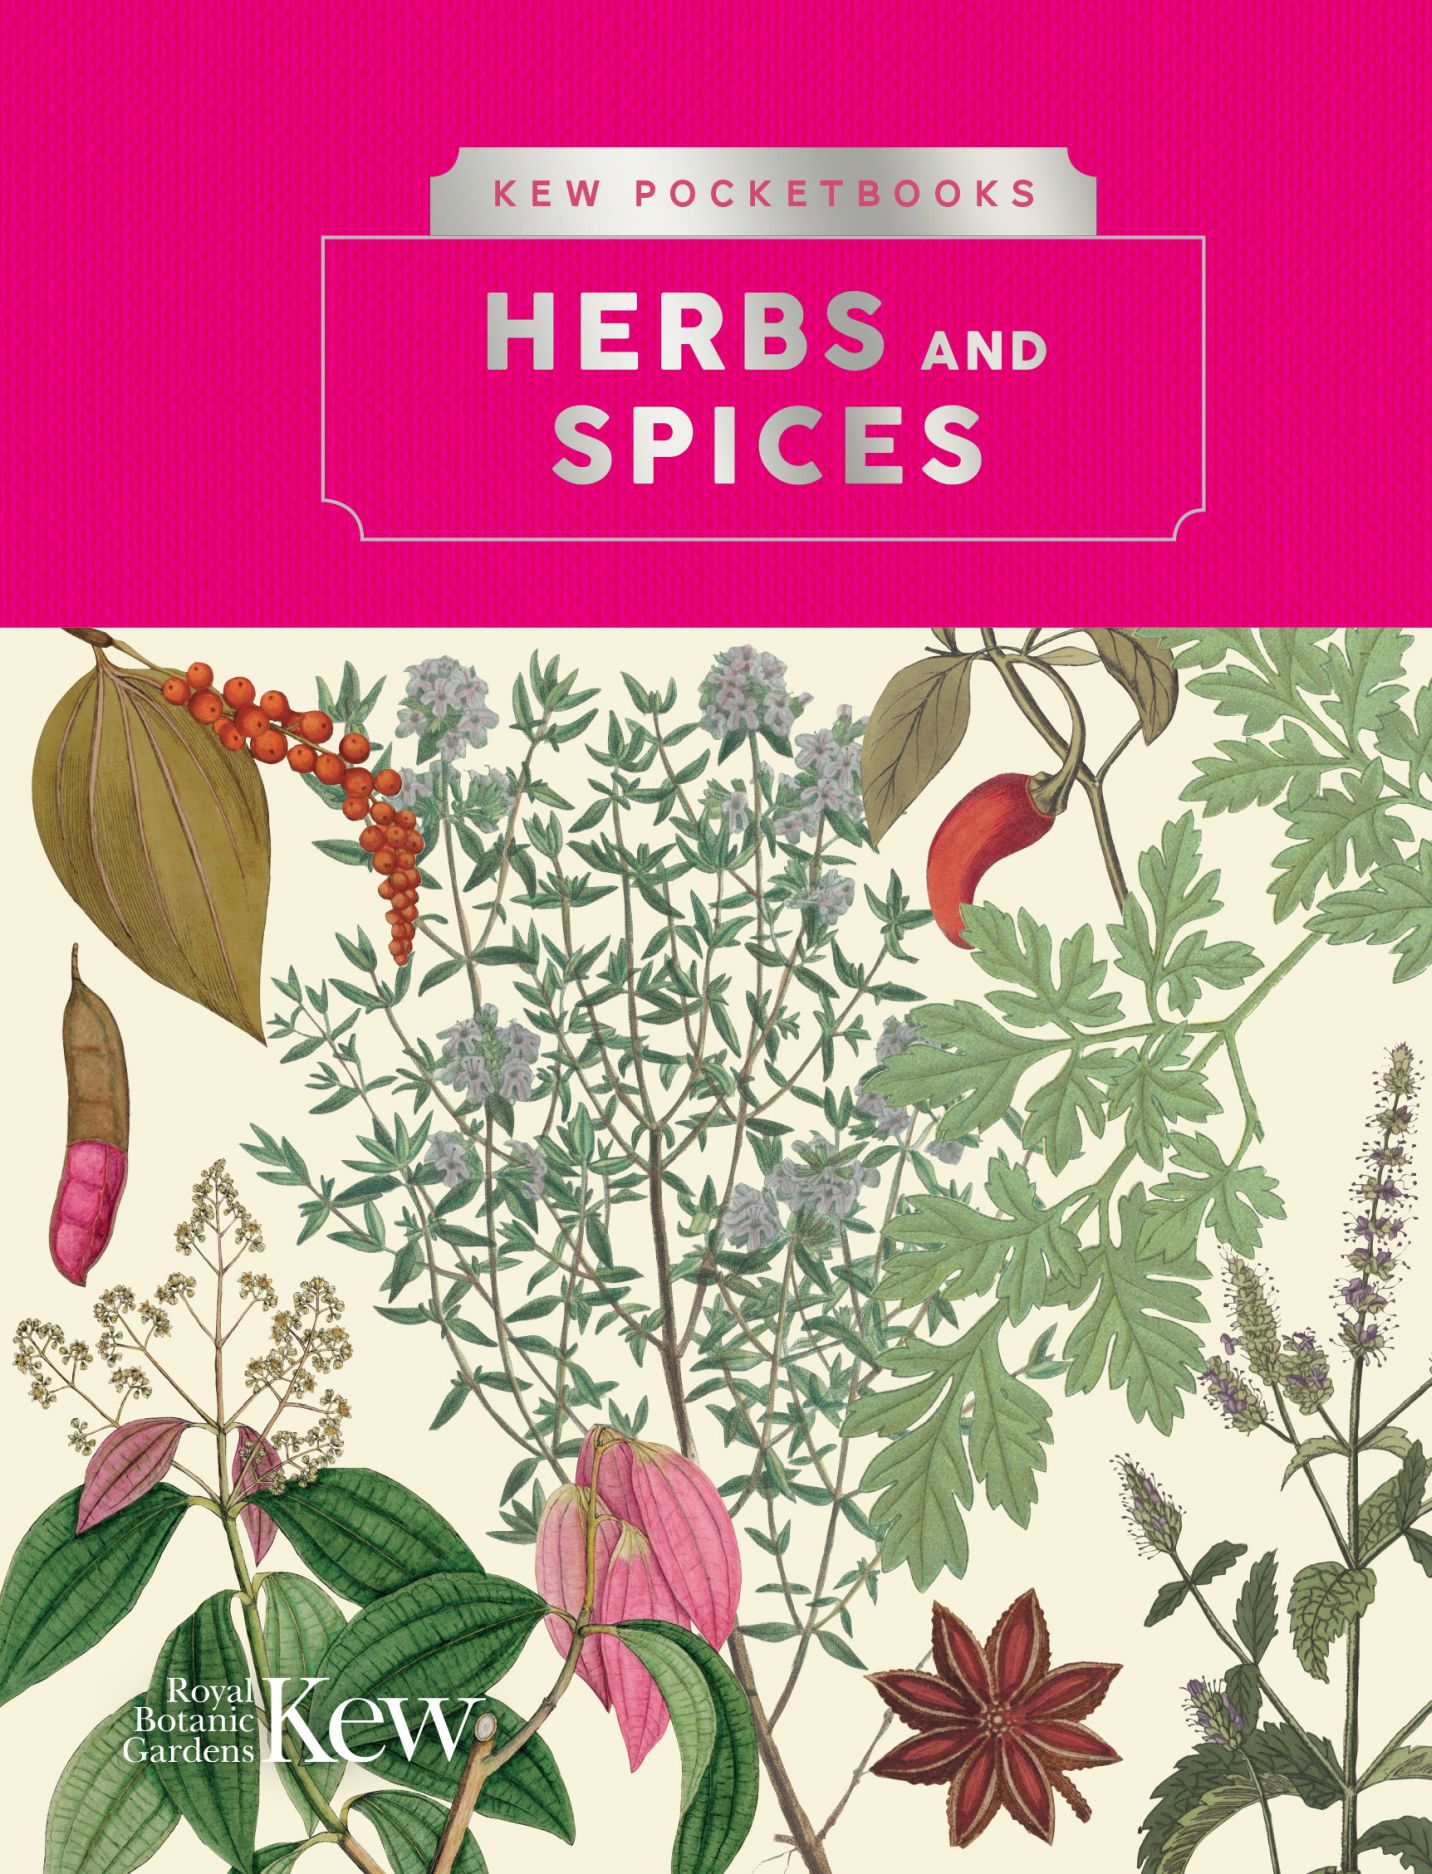 Kew Pocketbooks: Herbs and Spices, Nesbitt, Royal Botanic Gardens, Kew